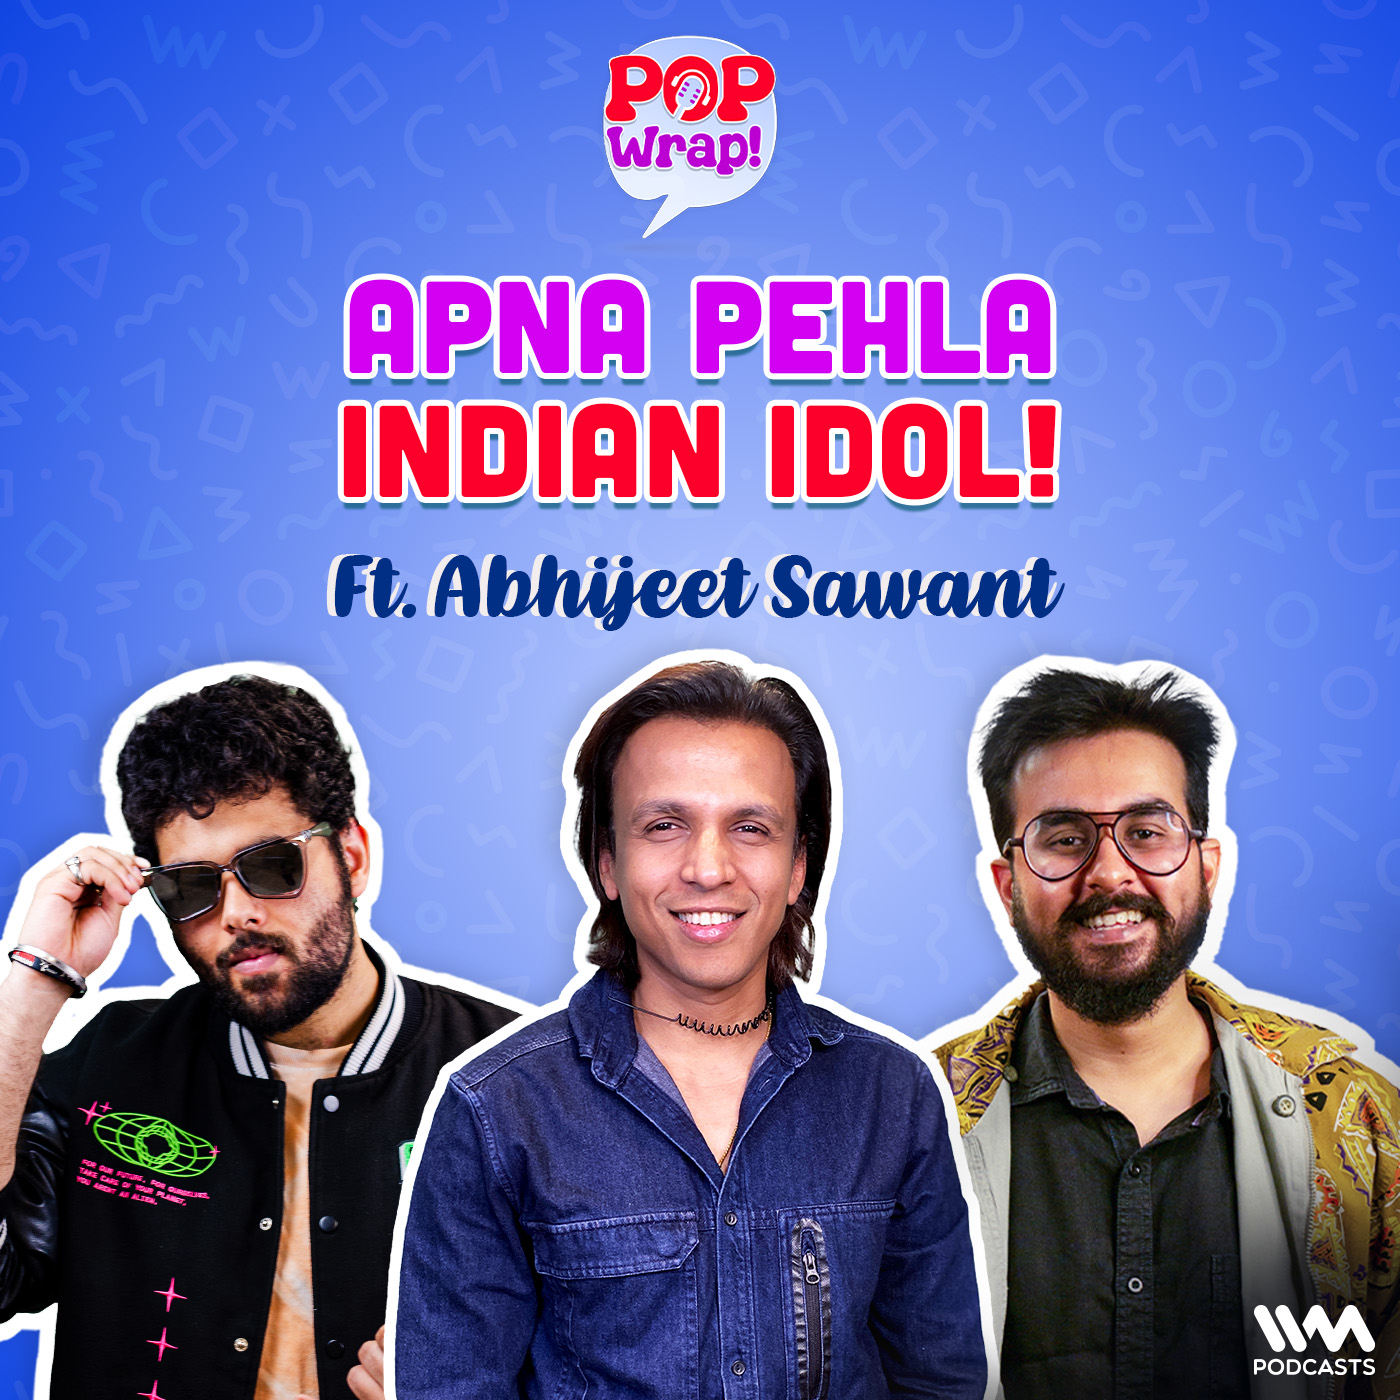 Apna Pehla Indian Idol! ft. Abhijeet Sawant | Pop Wrap!